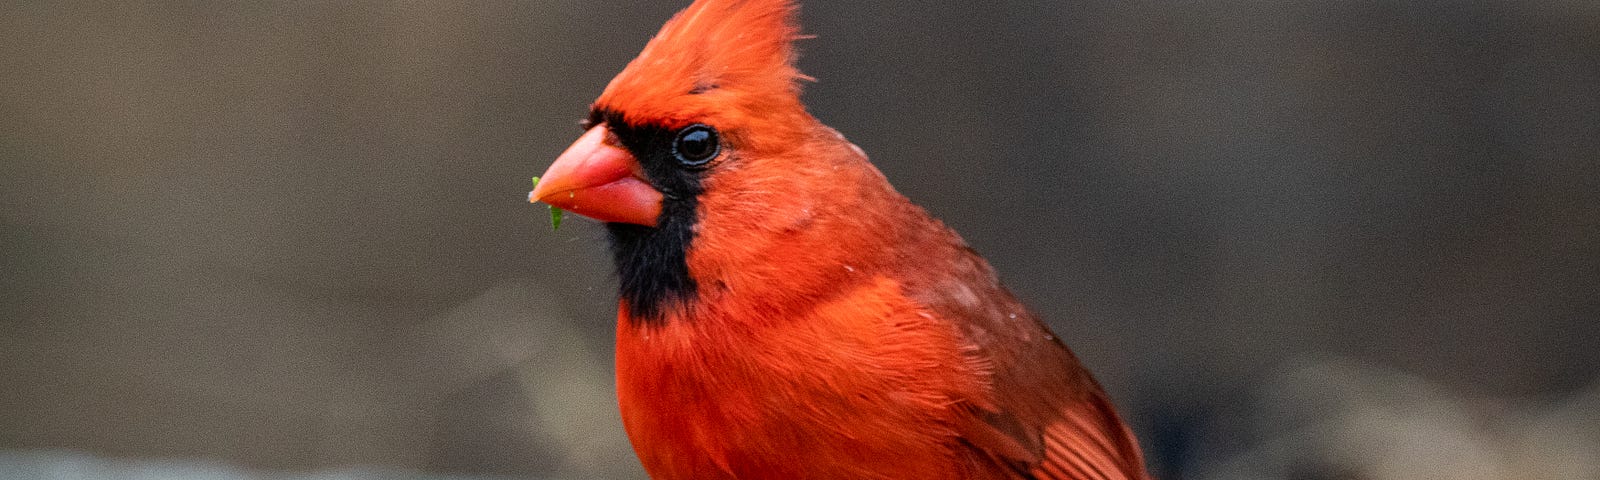 A bright red male cardinal bird.